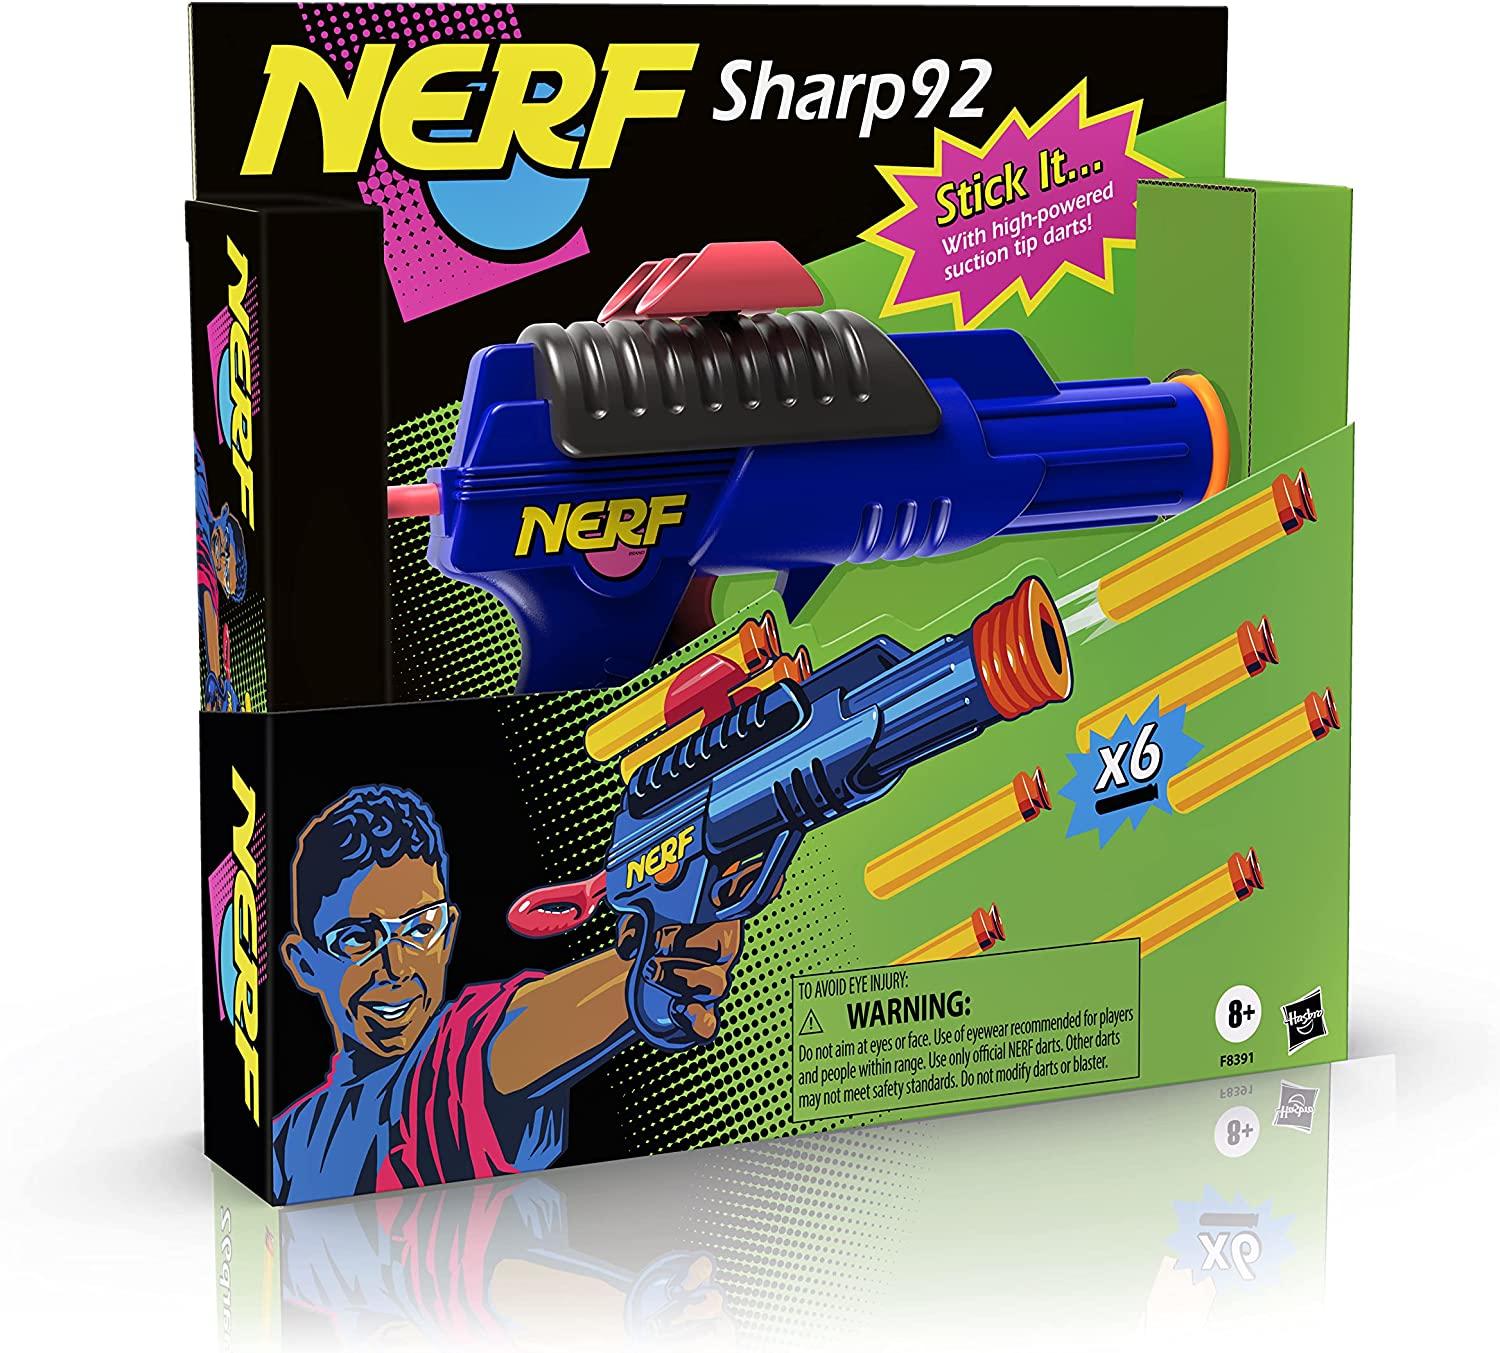 Sharp Shooter's Stirr-up